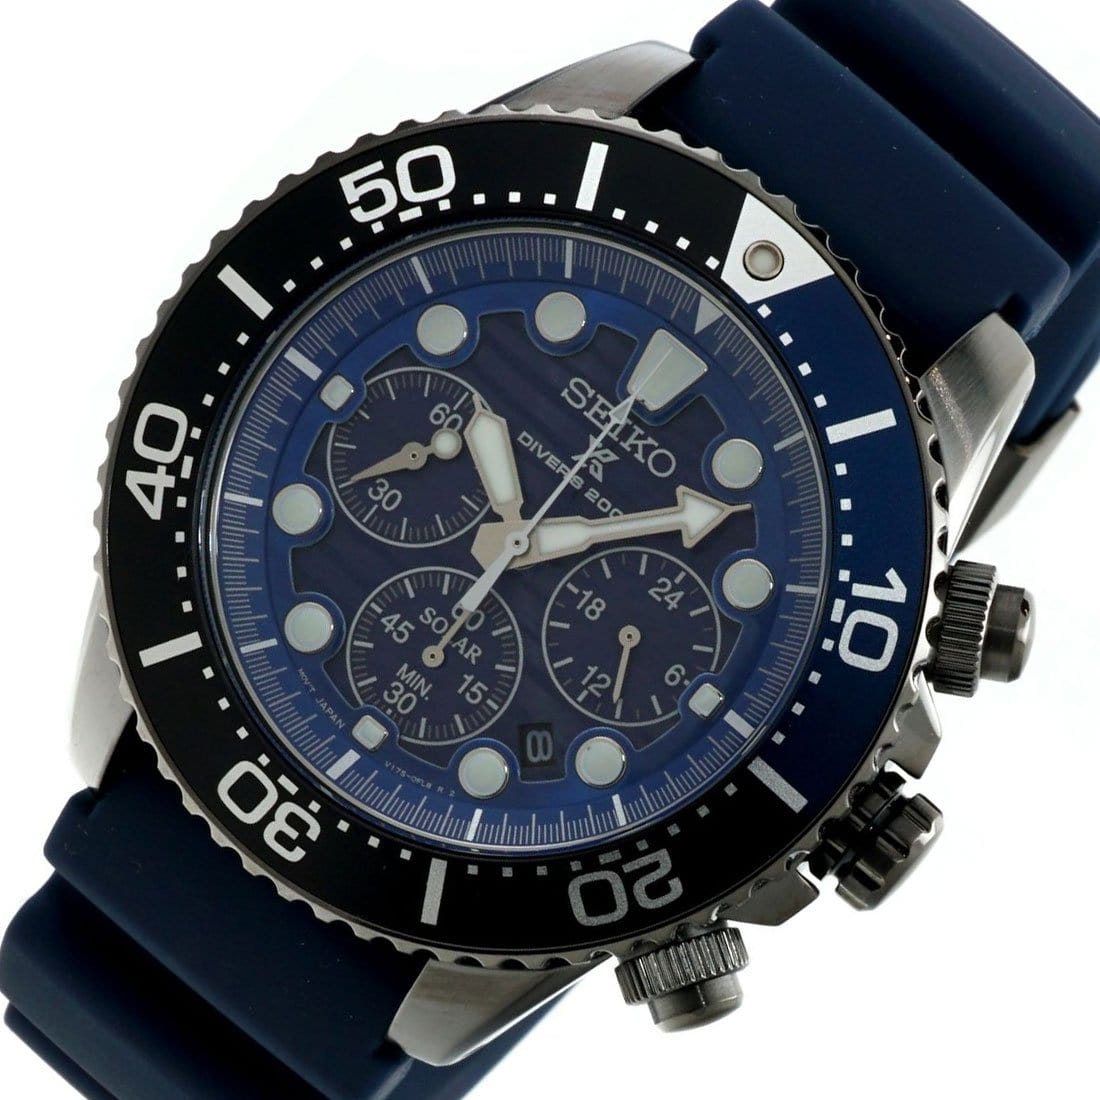 Seiko SSC701P1 SSC701 Save the Ocean Diving Watch